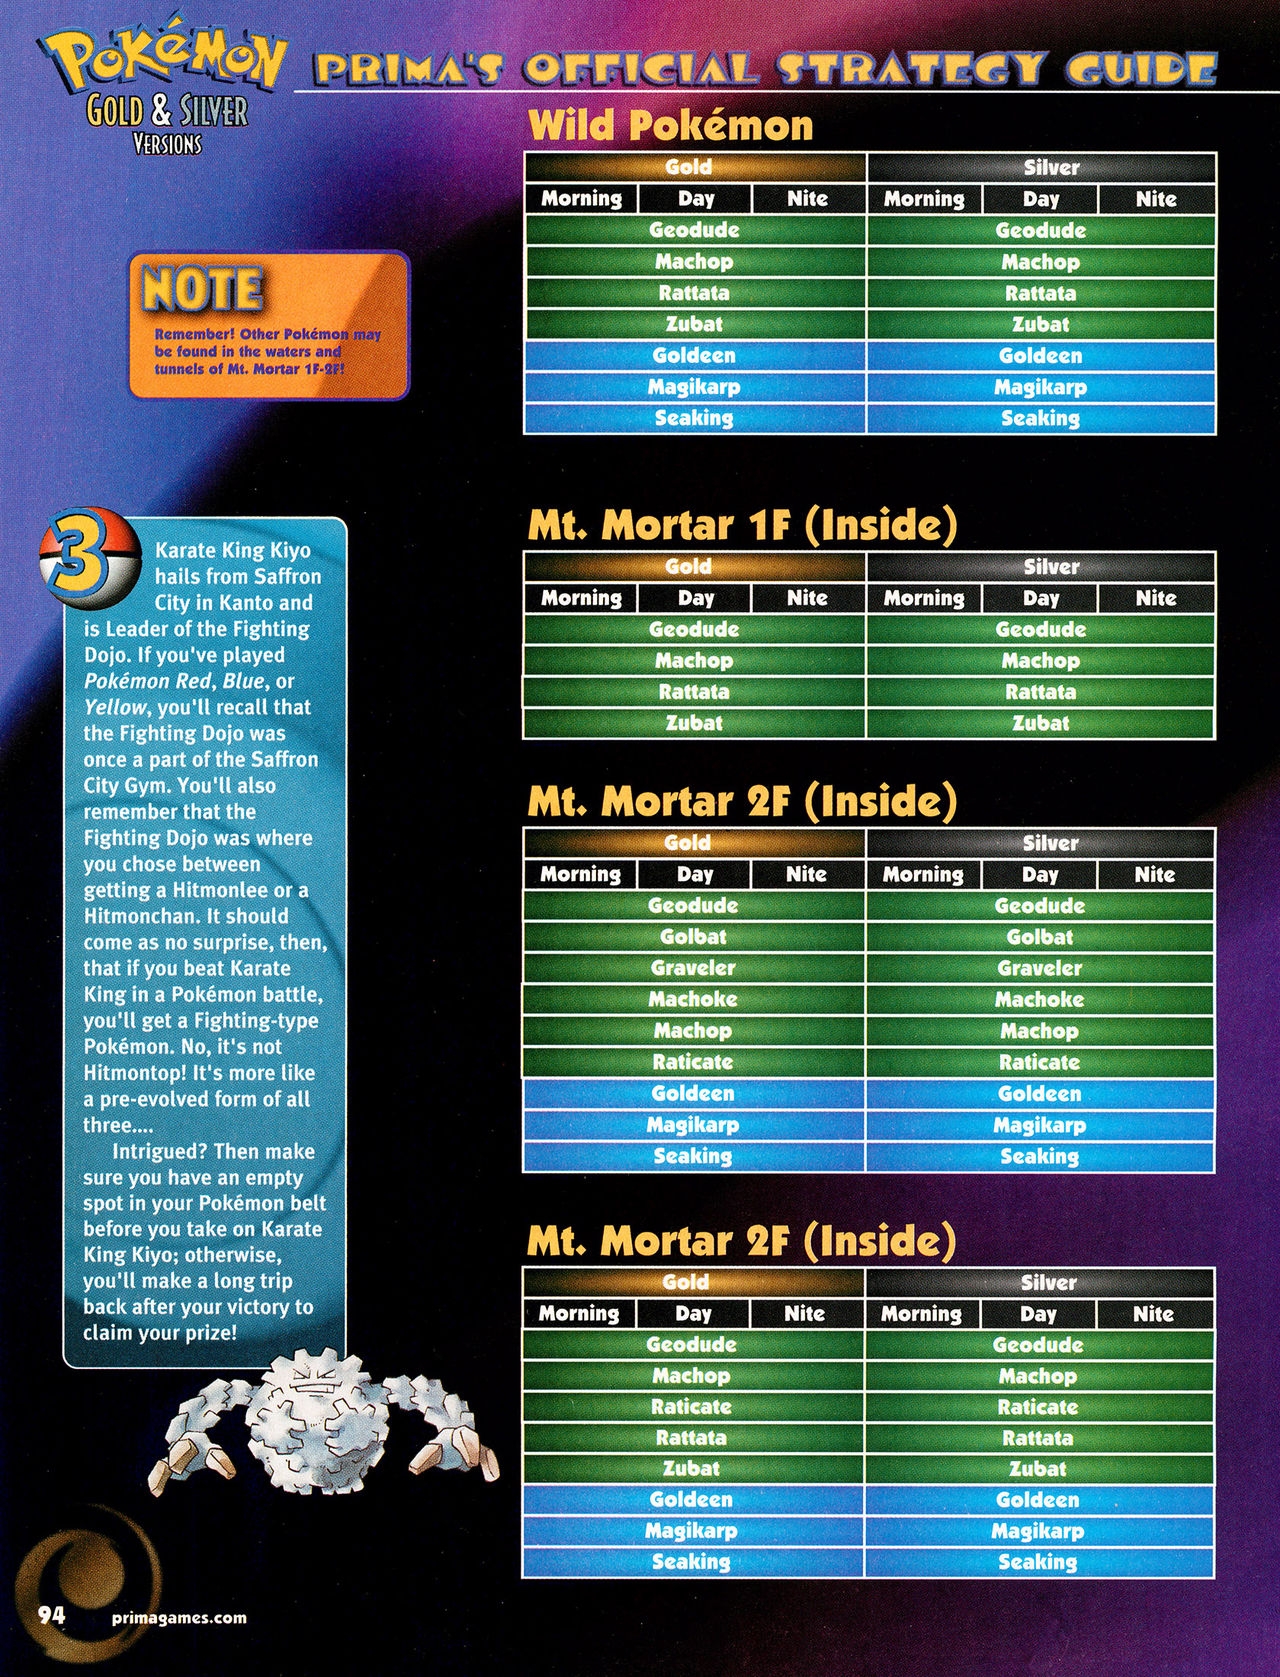 Pokémon Gold & Silver Versions - Strategy Guide 95